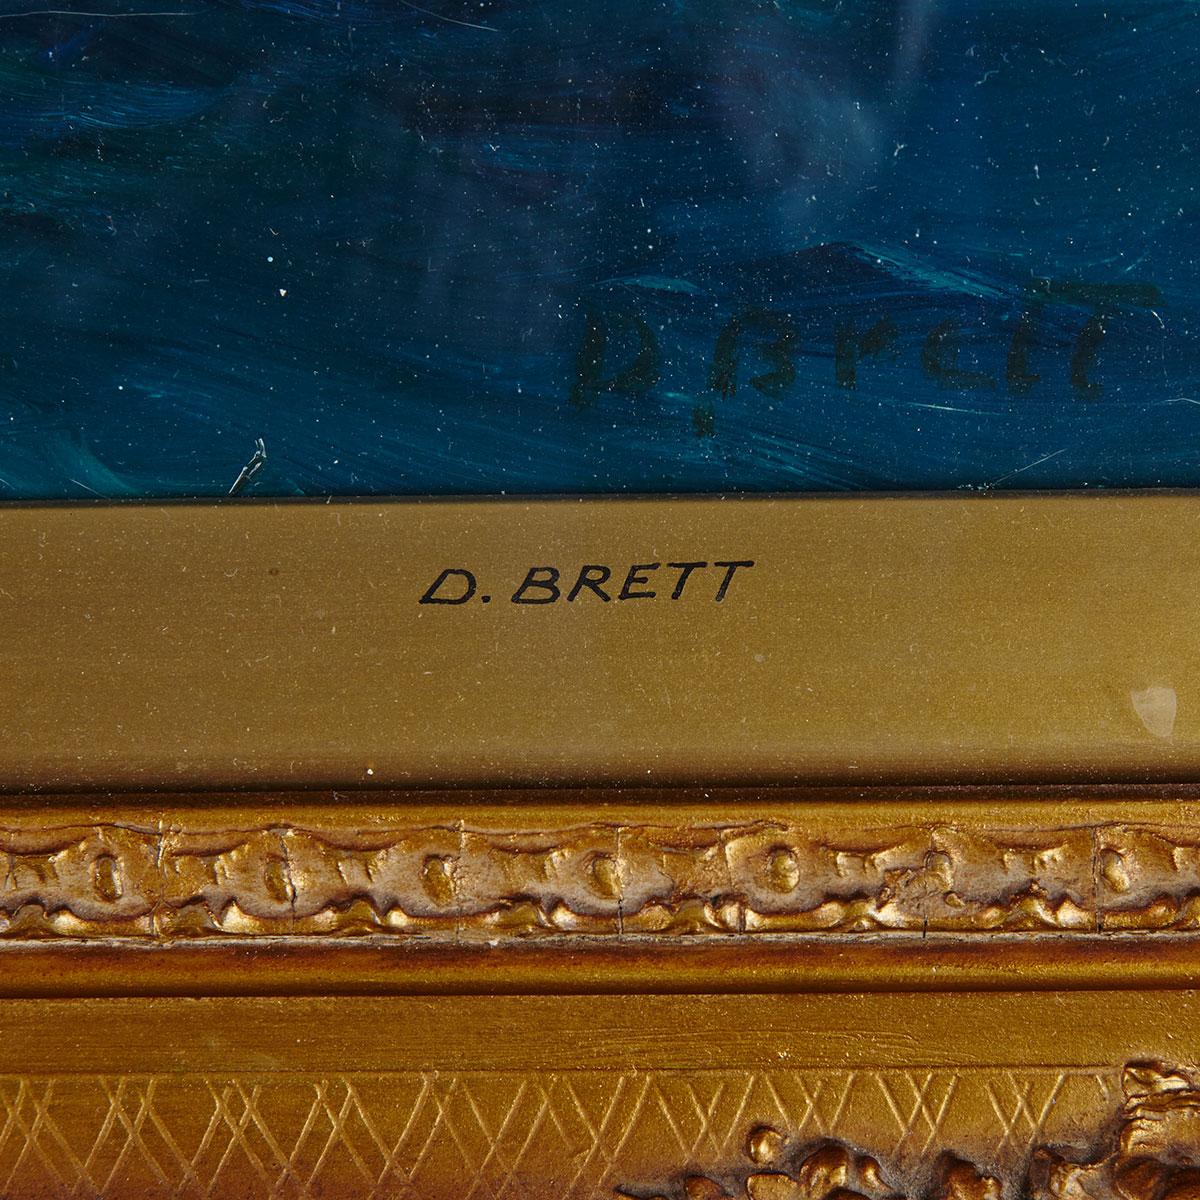 Donald Brett (20th Century)